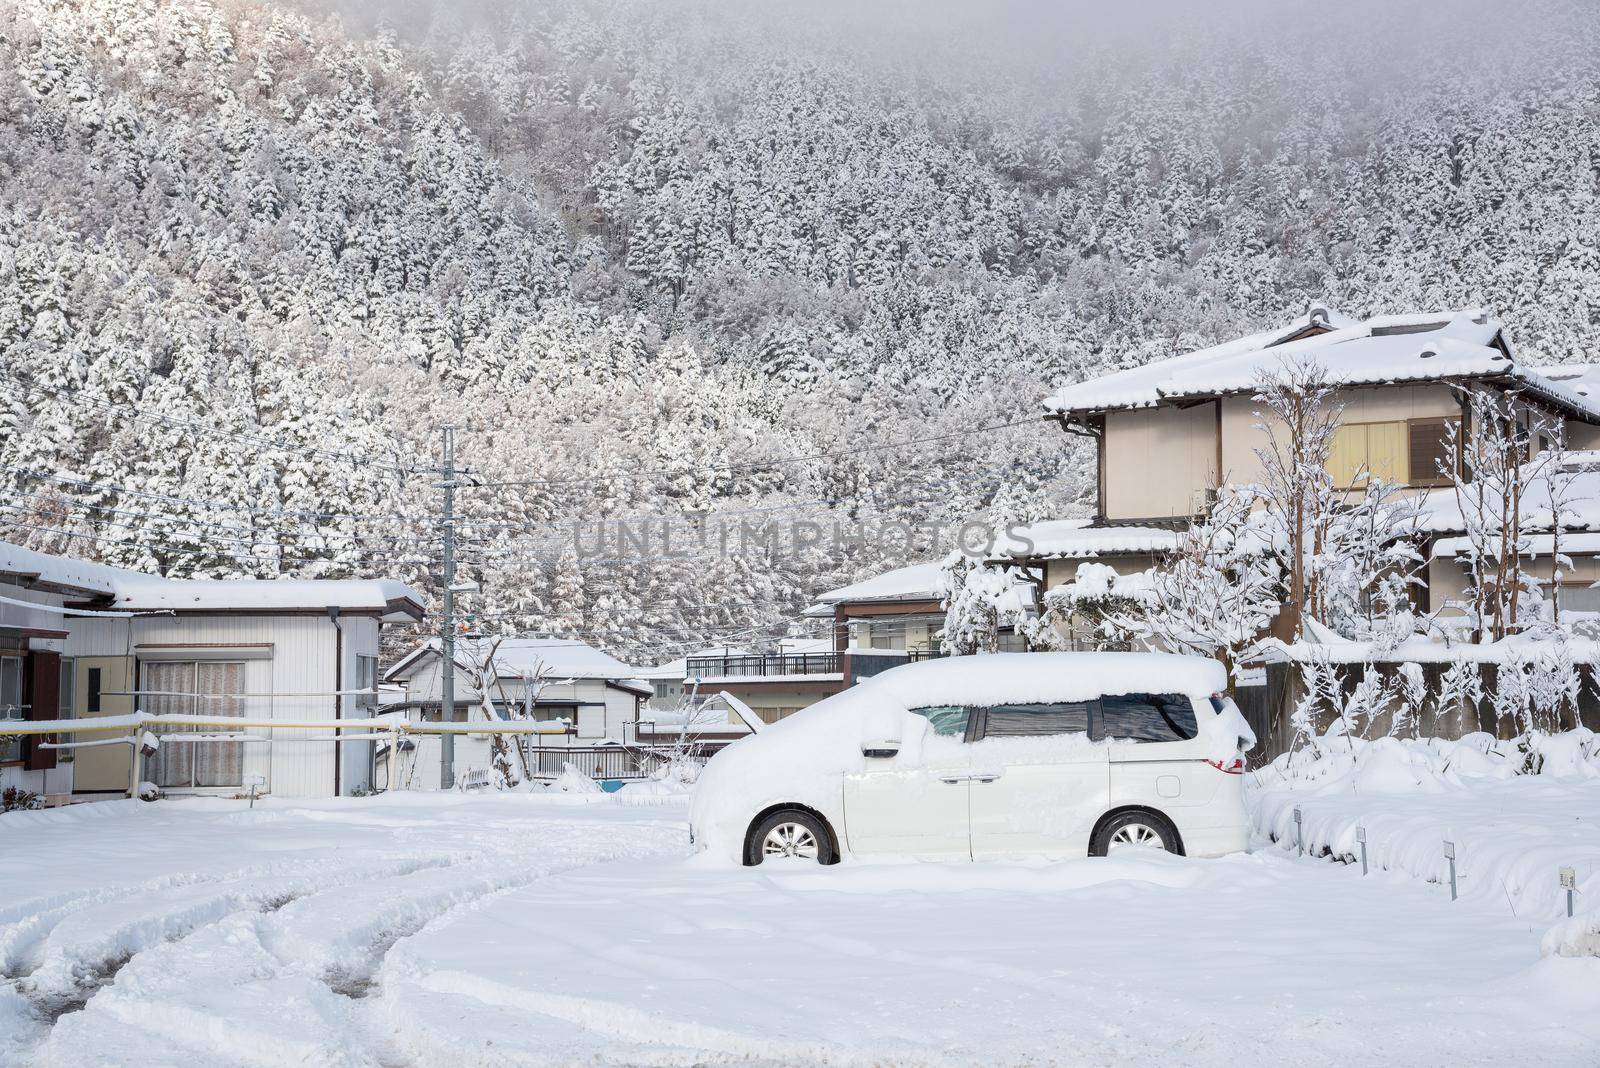 Fresh white snow falling at public park cover road and car in winter season at Kawaguchiko,Japan.